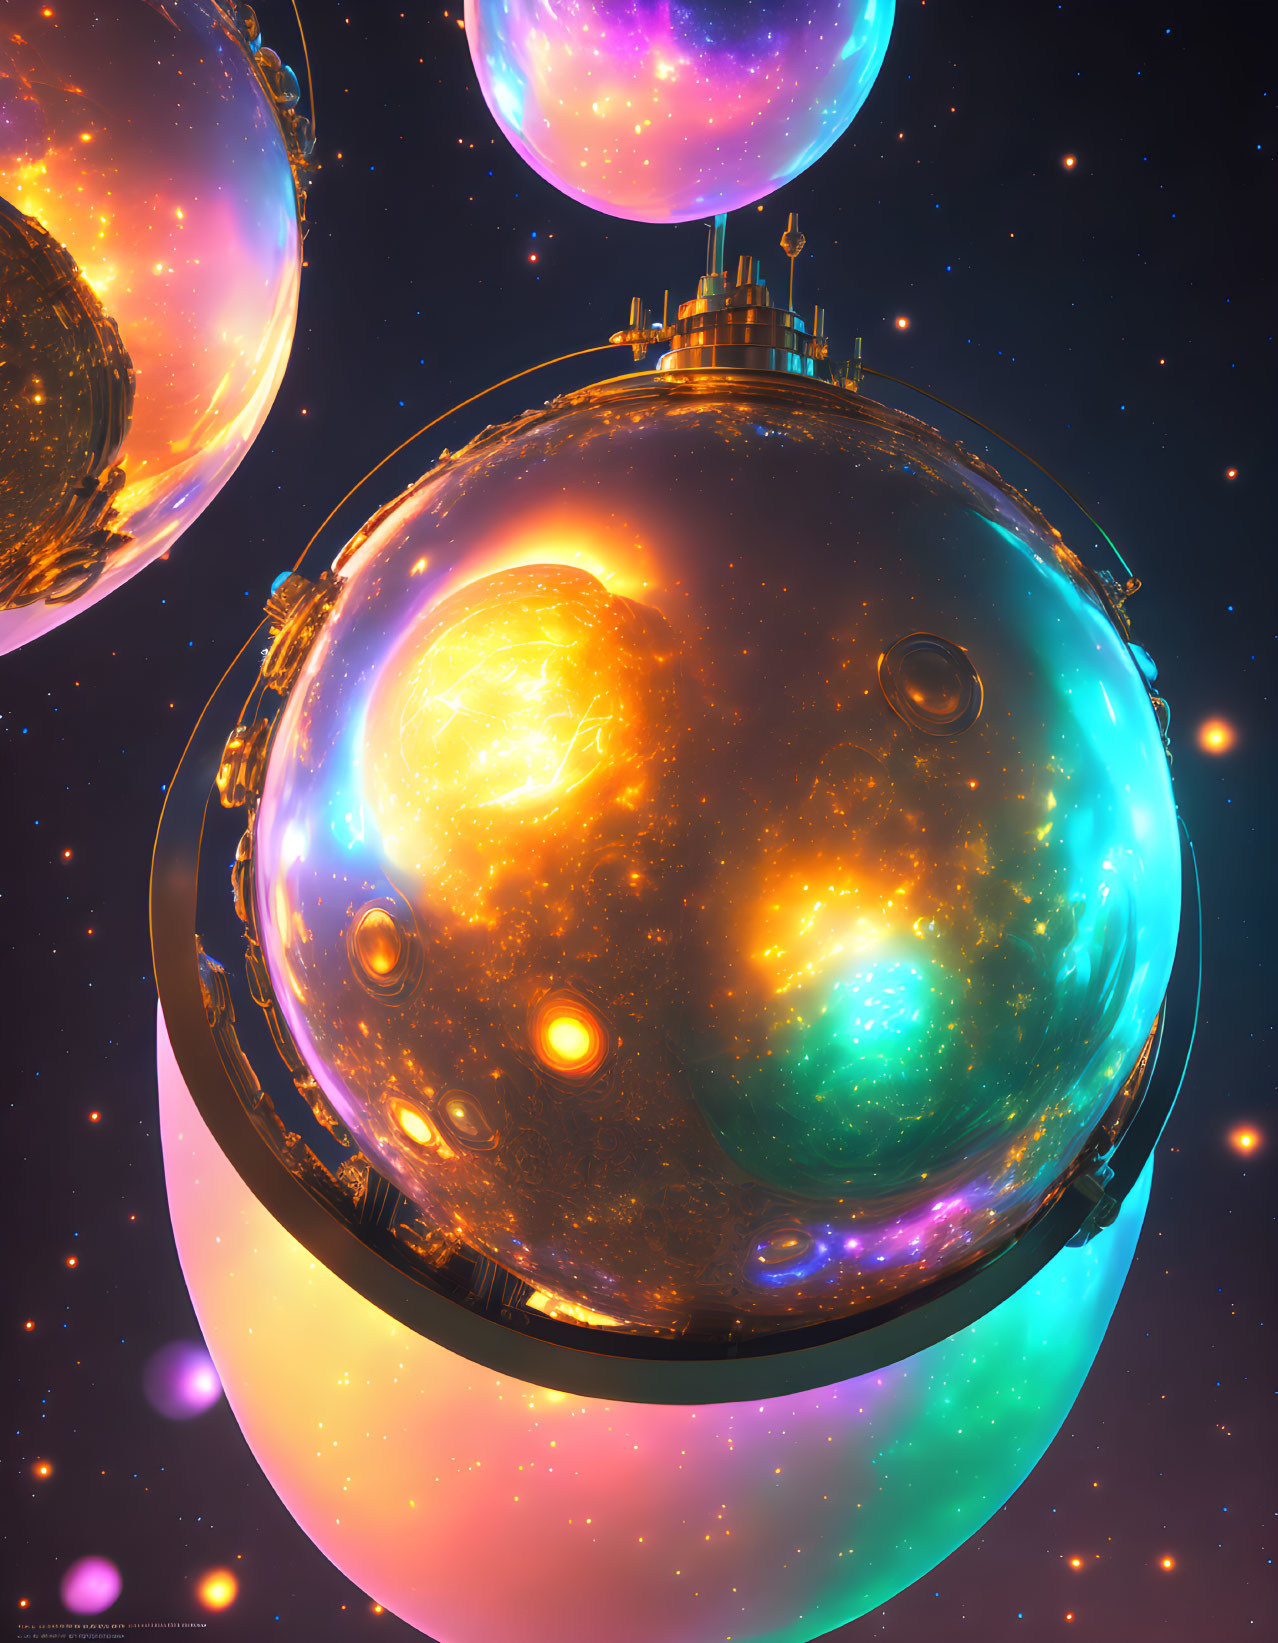 Interconnected luminescent spheres in cosmic digital artwork